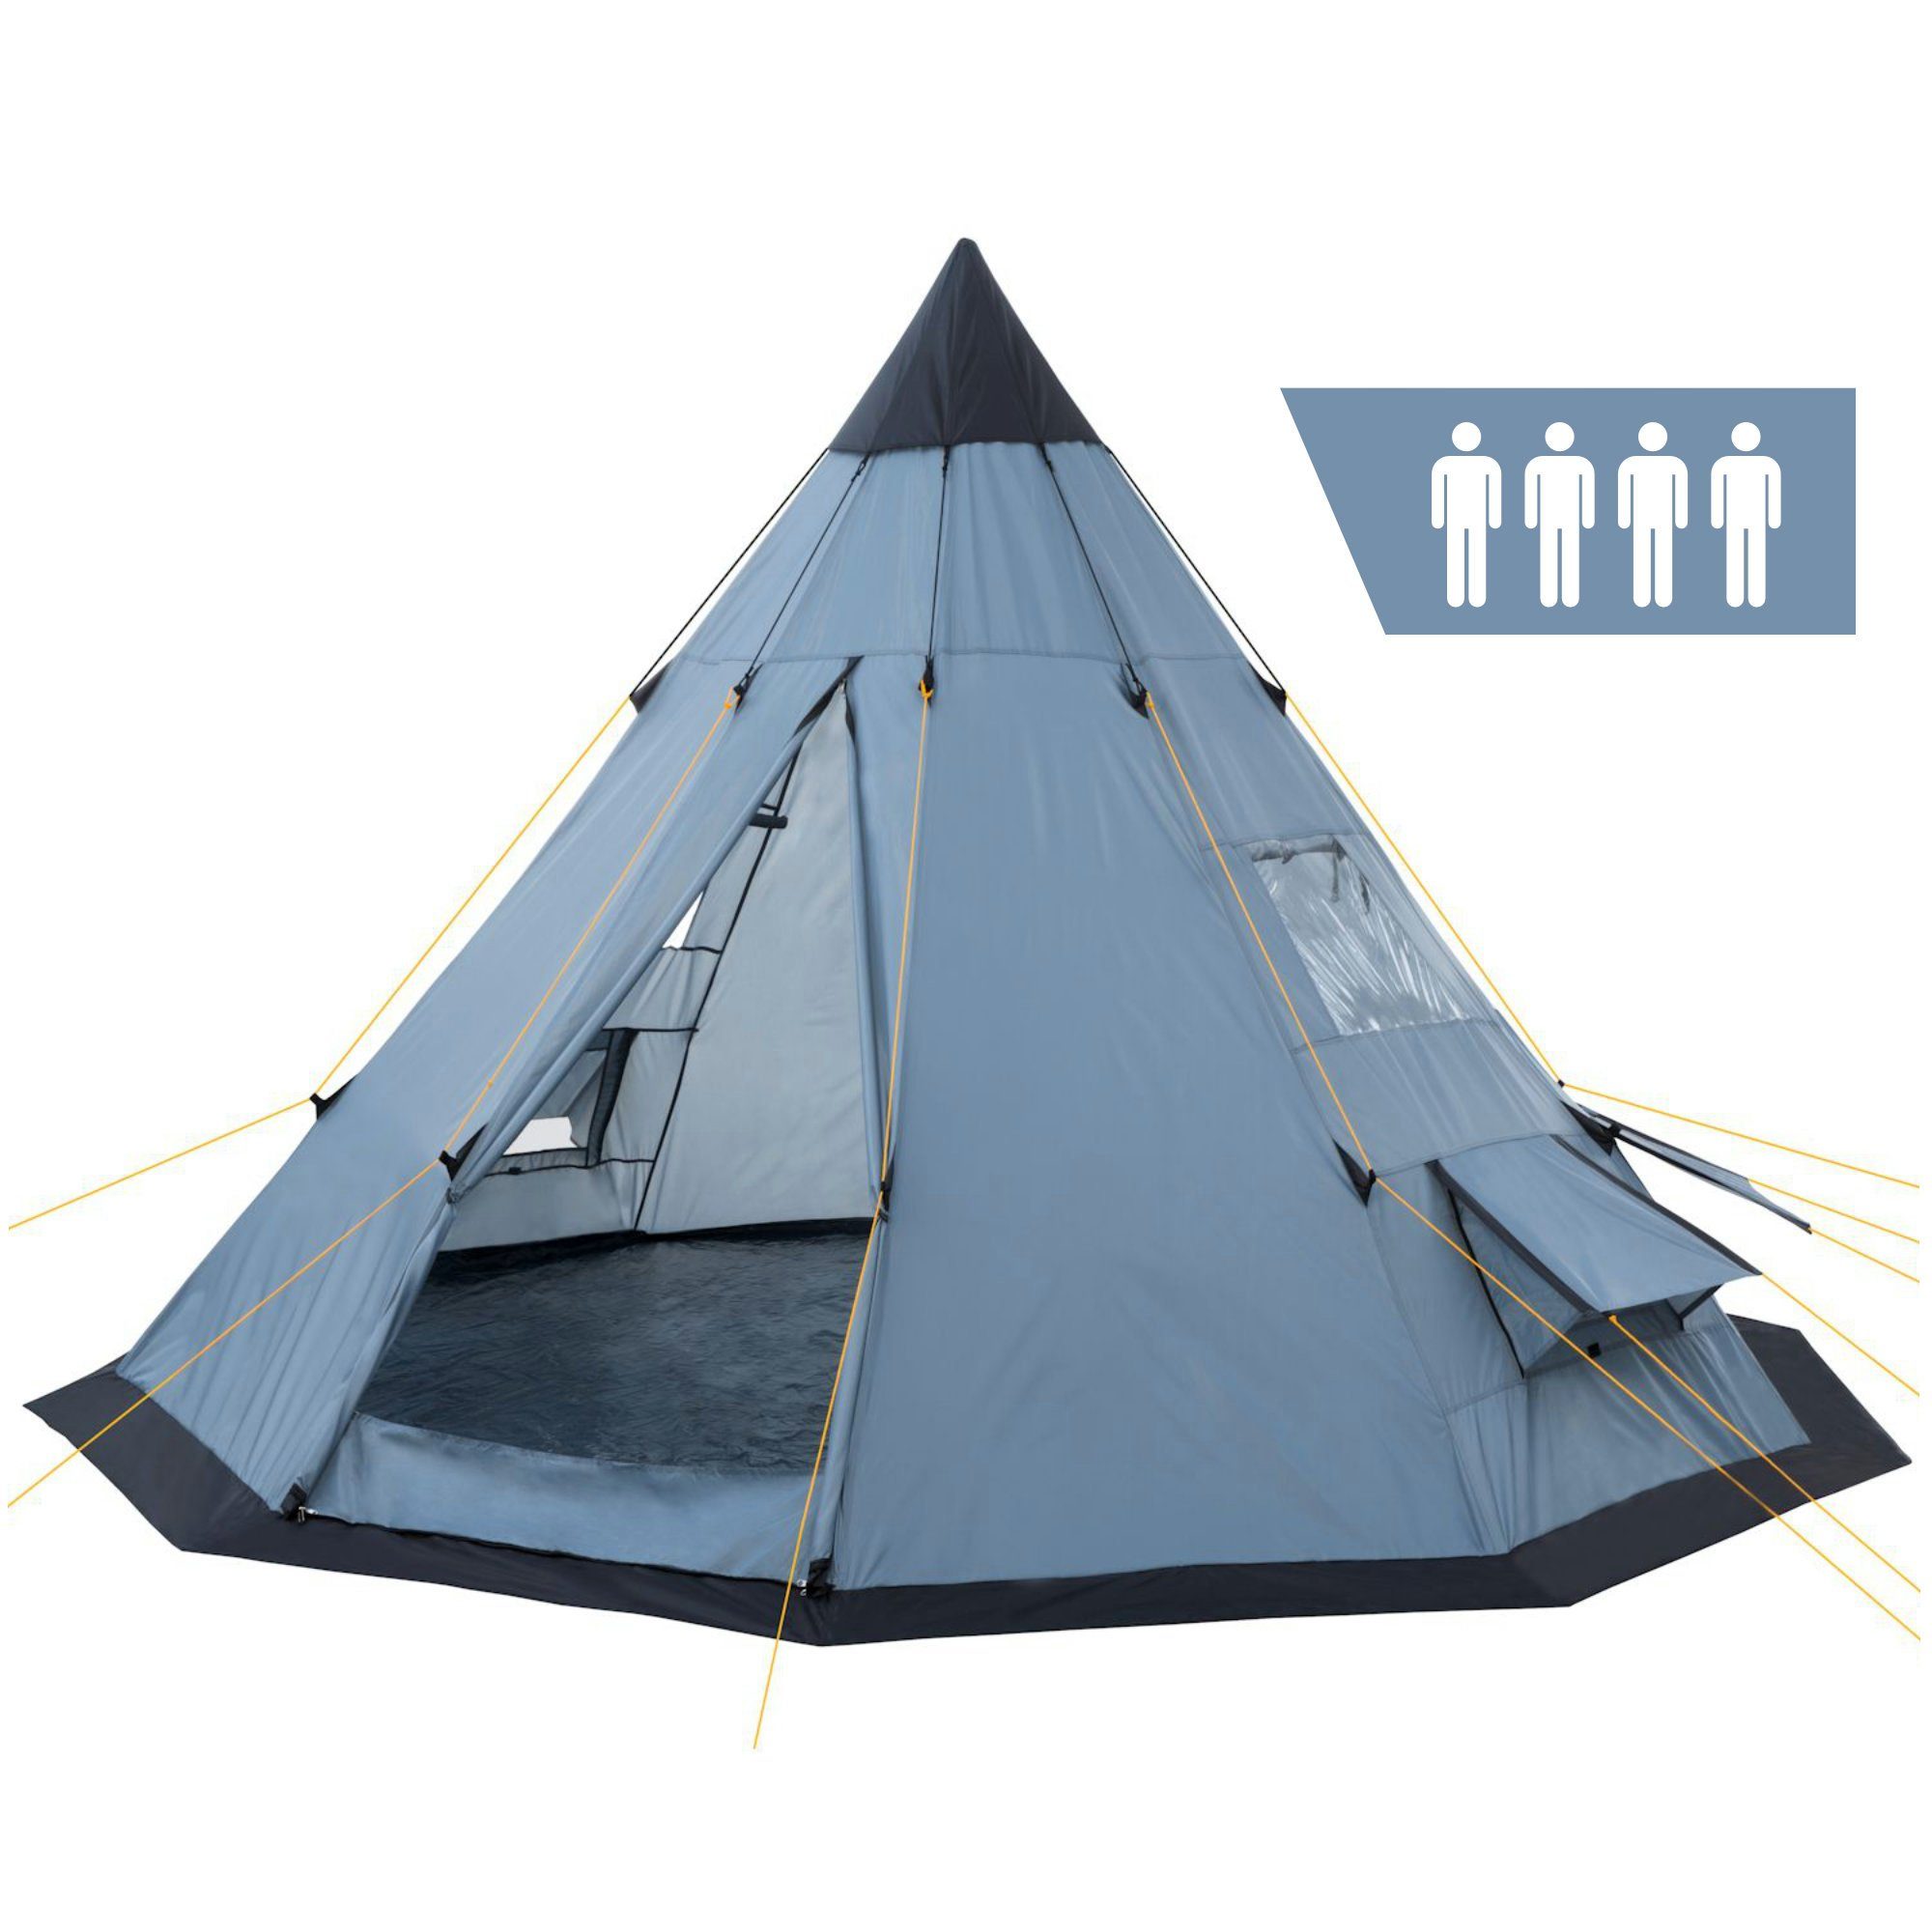 mm 3000 Tipi-Zelt Spirit Zelt Personen: 4 Tipi für Personen, 4 CampFeuer Wassersäule, Grau,